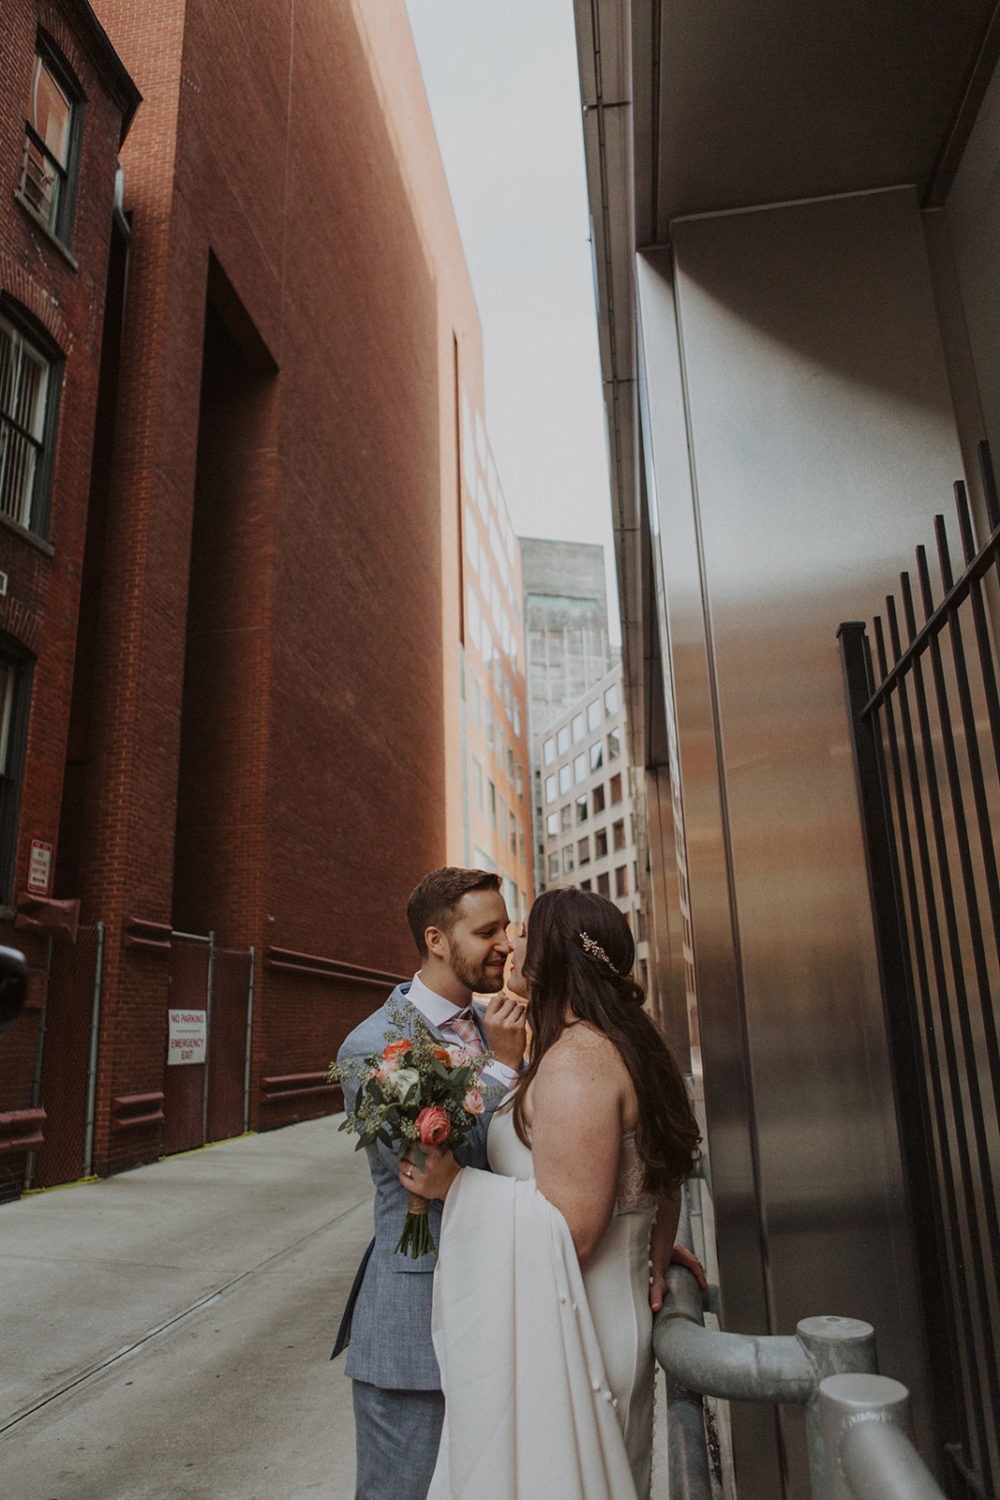 Couple embraces holding wedding bouquet on DC street